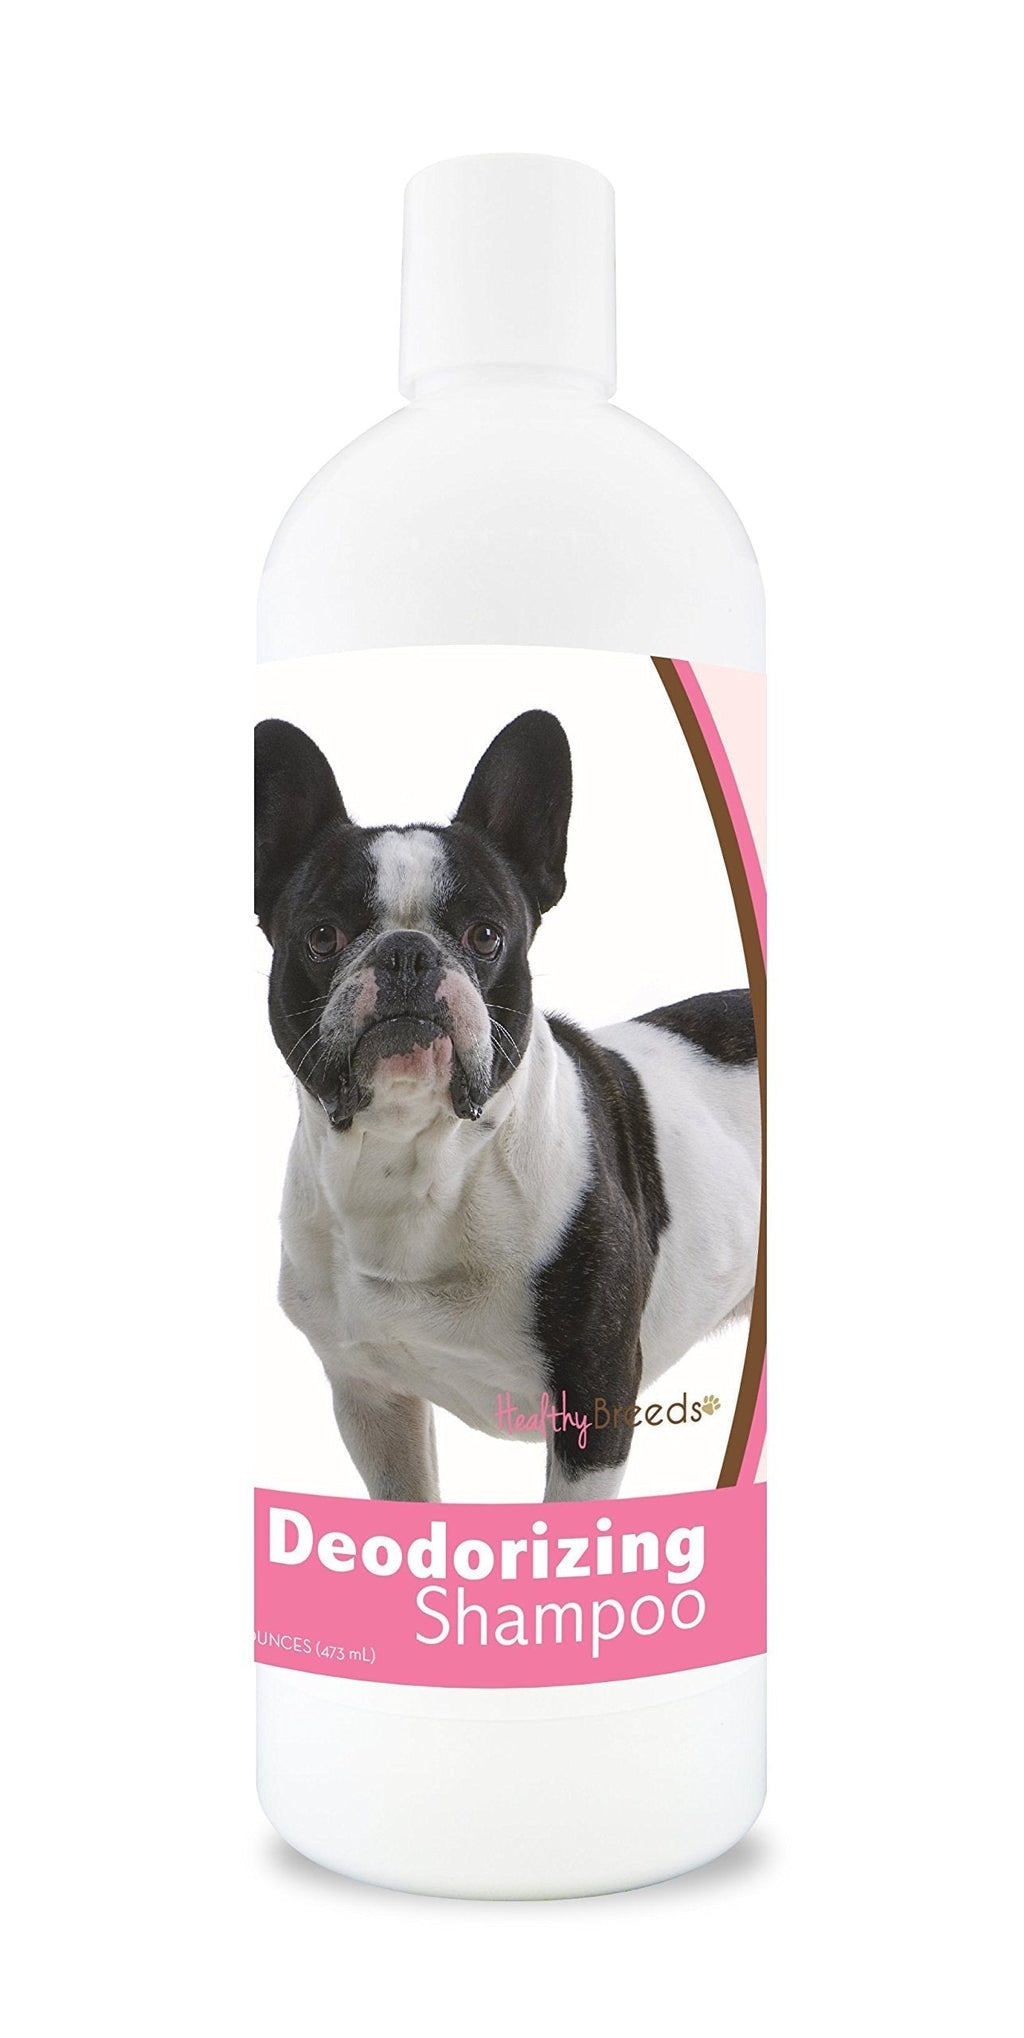 [Australia] - Healthy Breeds Dog Deodorizing Shampoo - Sweet Pea & Vanilla Scent - Hypoallergenic and pH Balanced Formula - 16 oz French Bulldog 